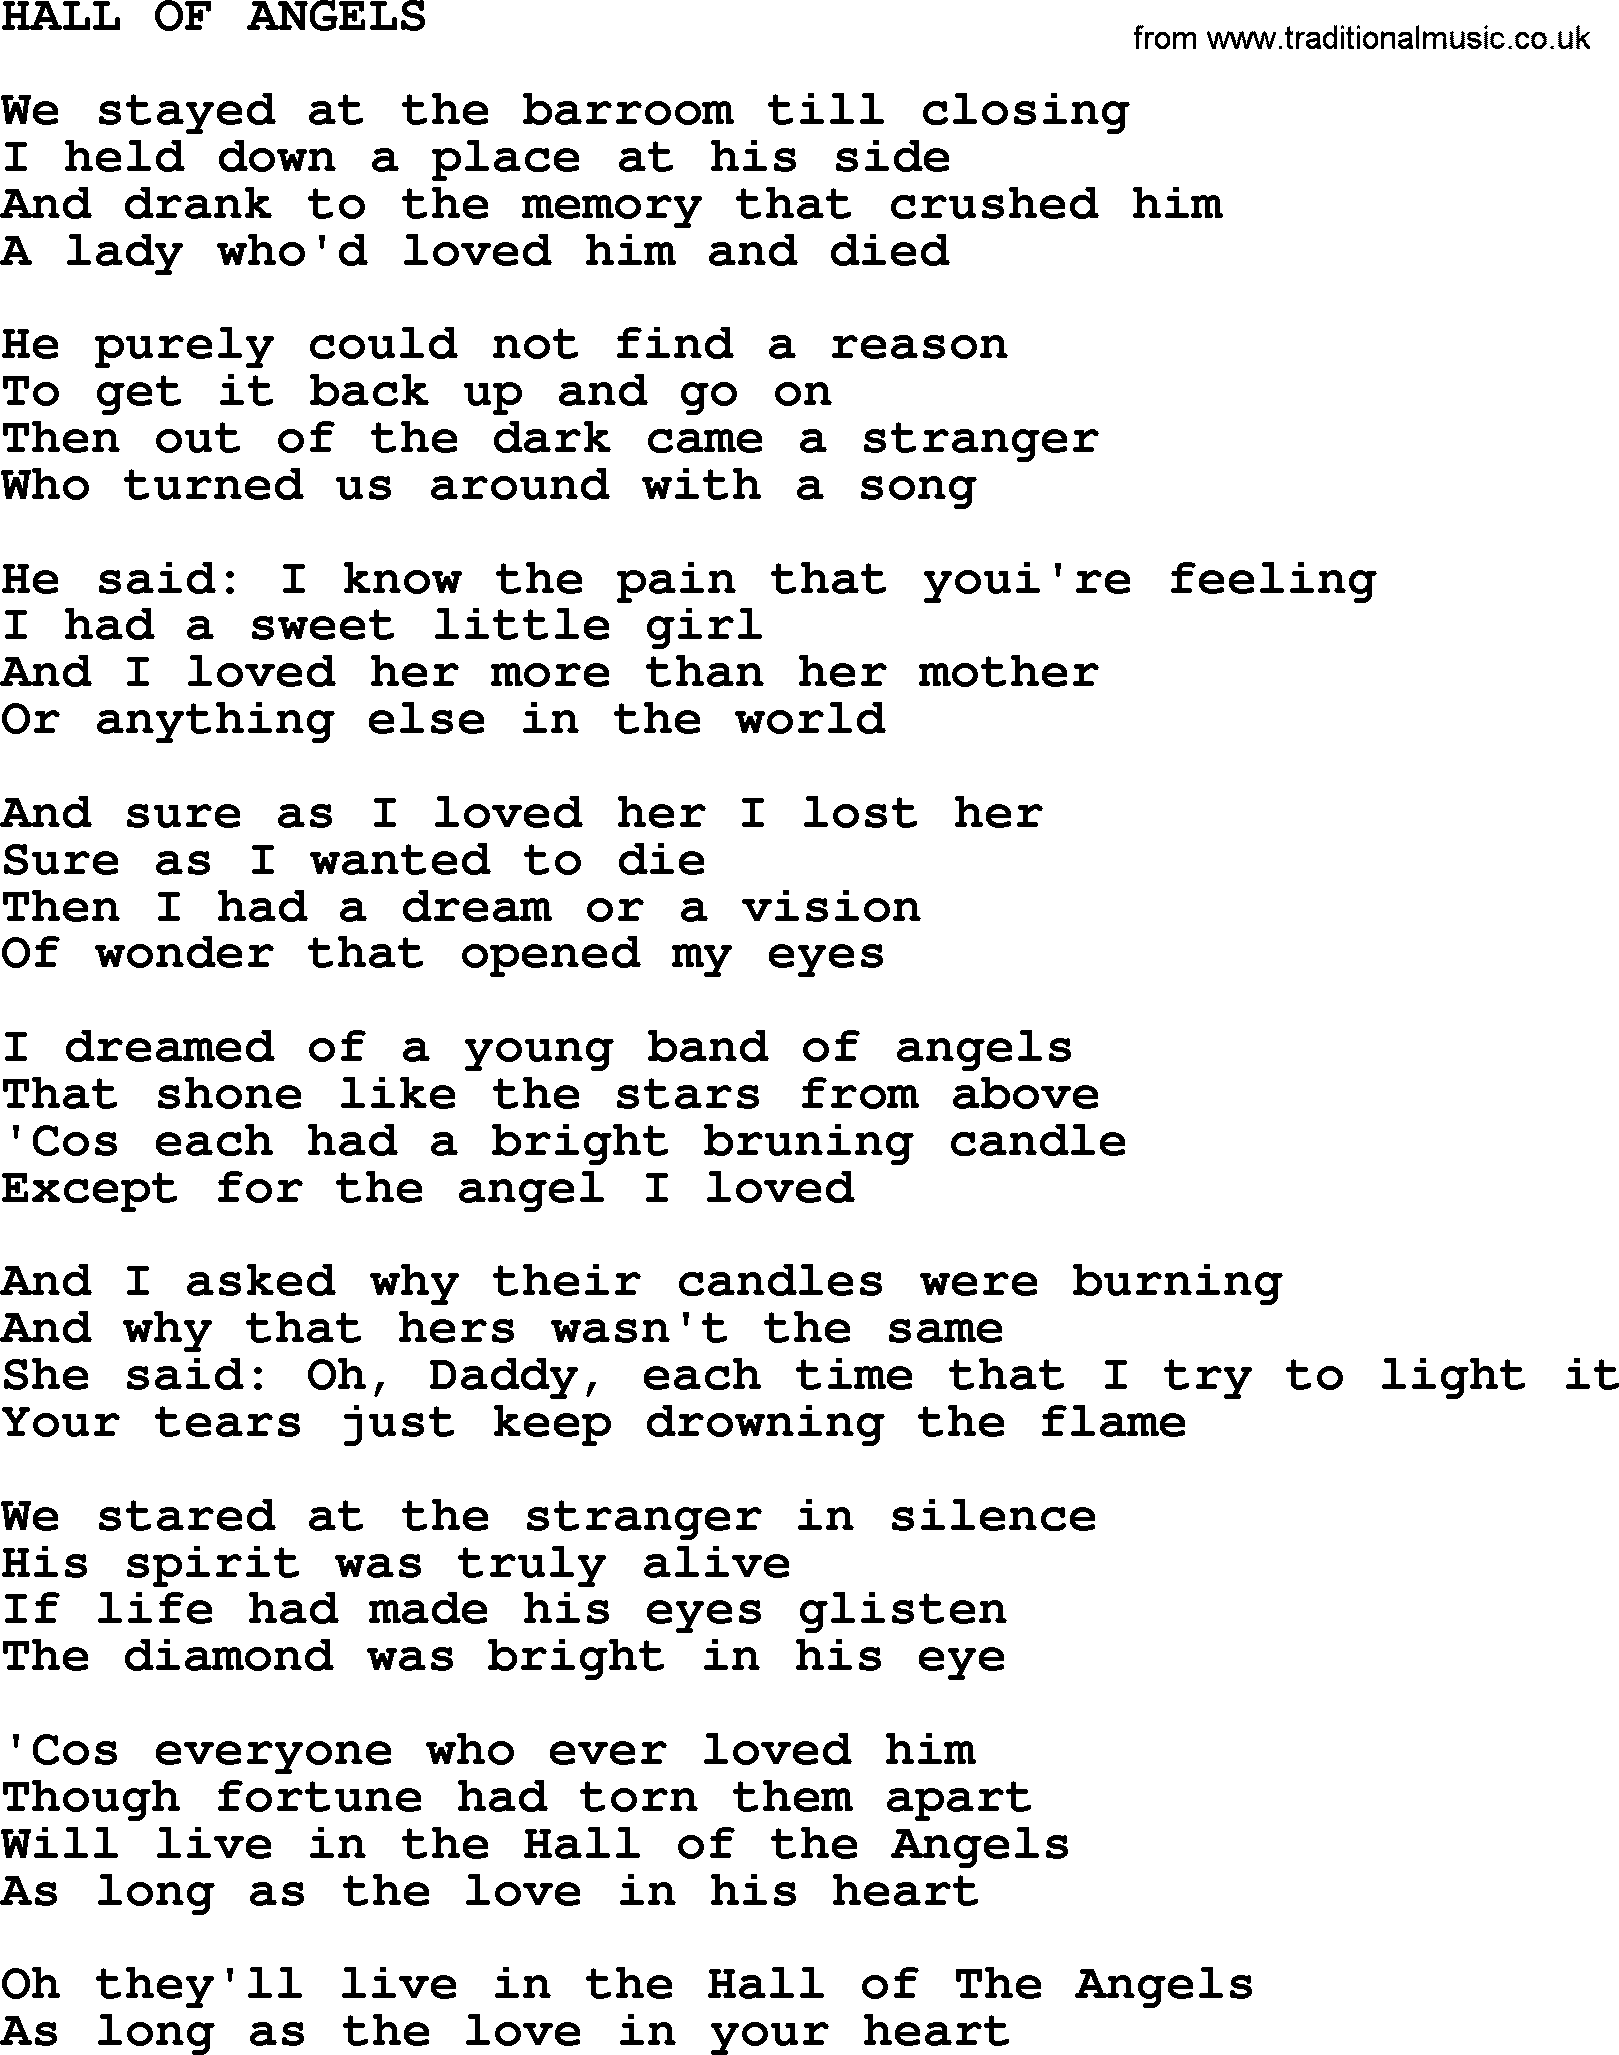 Kris Kristofferson song: Hall Of Angels lyrics